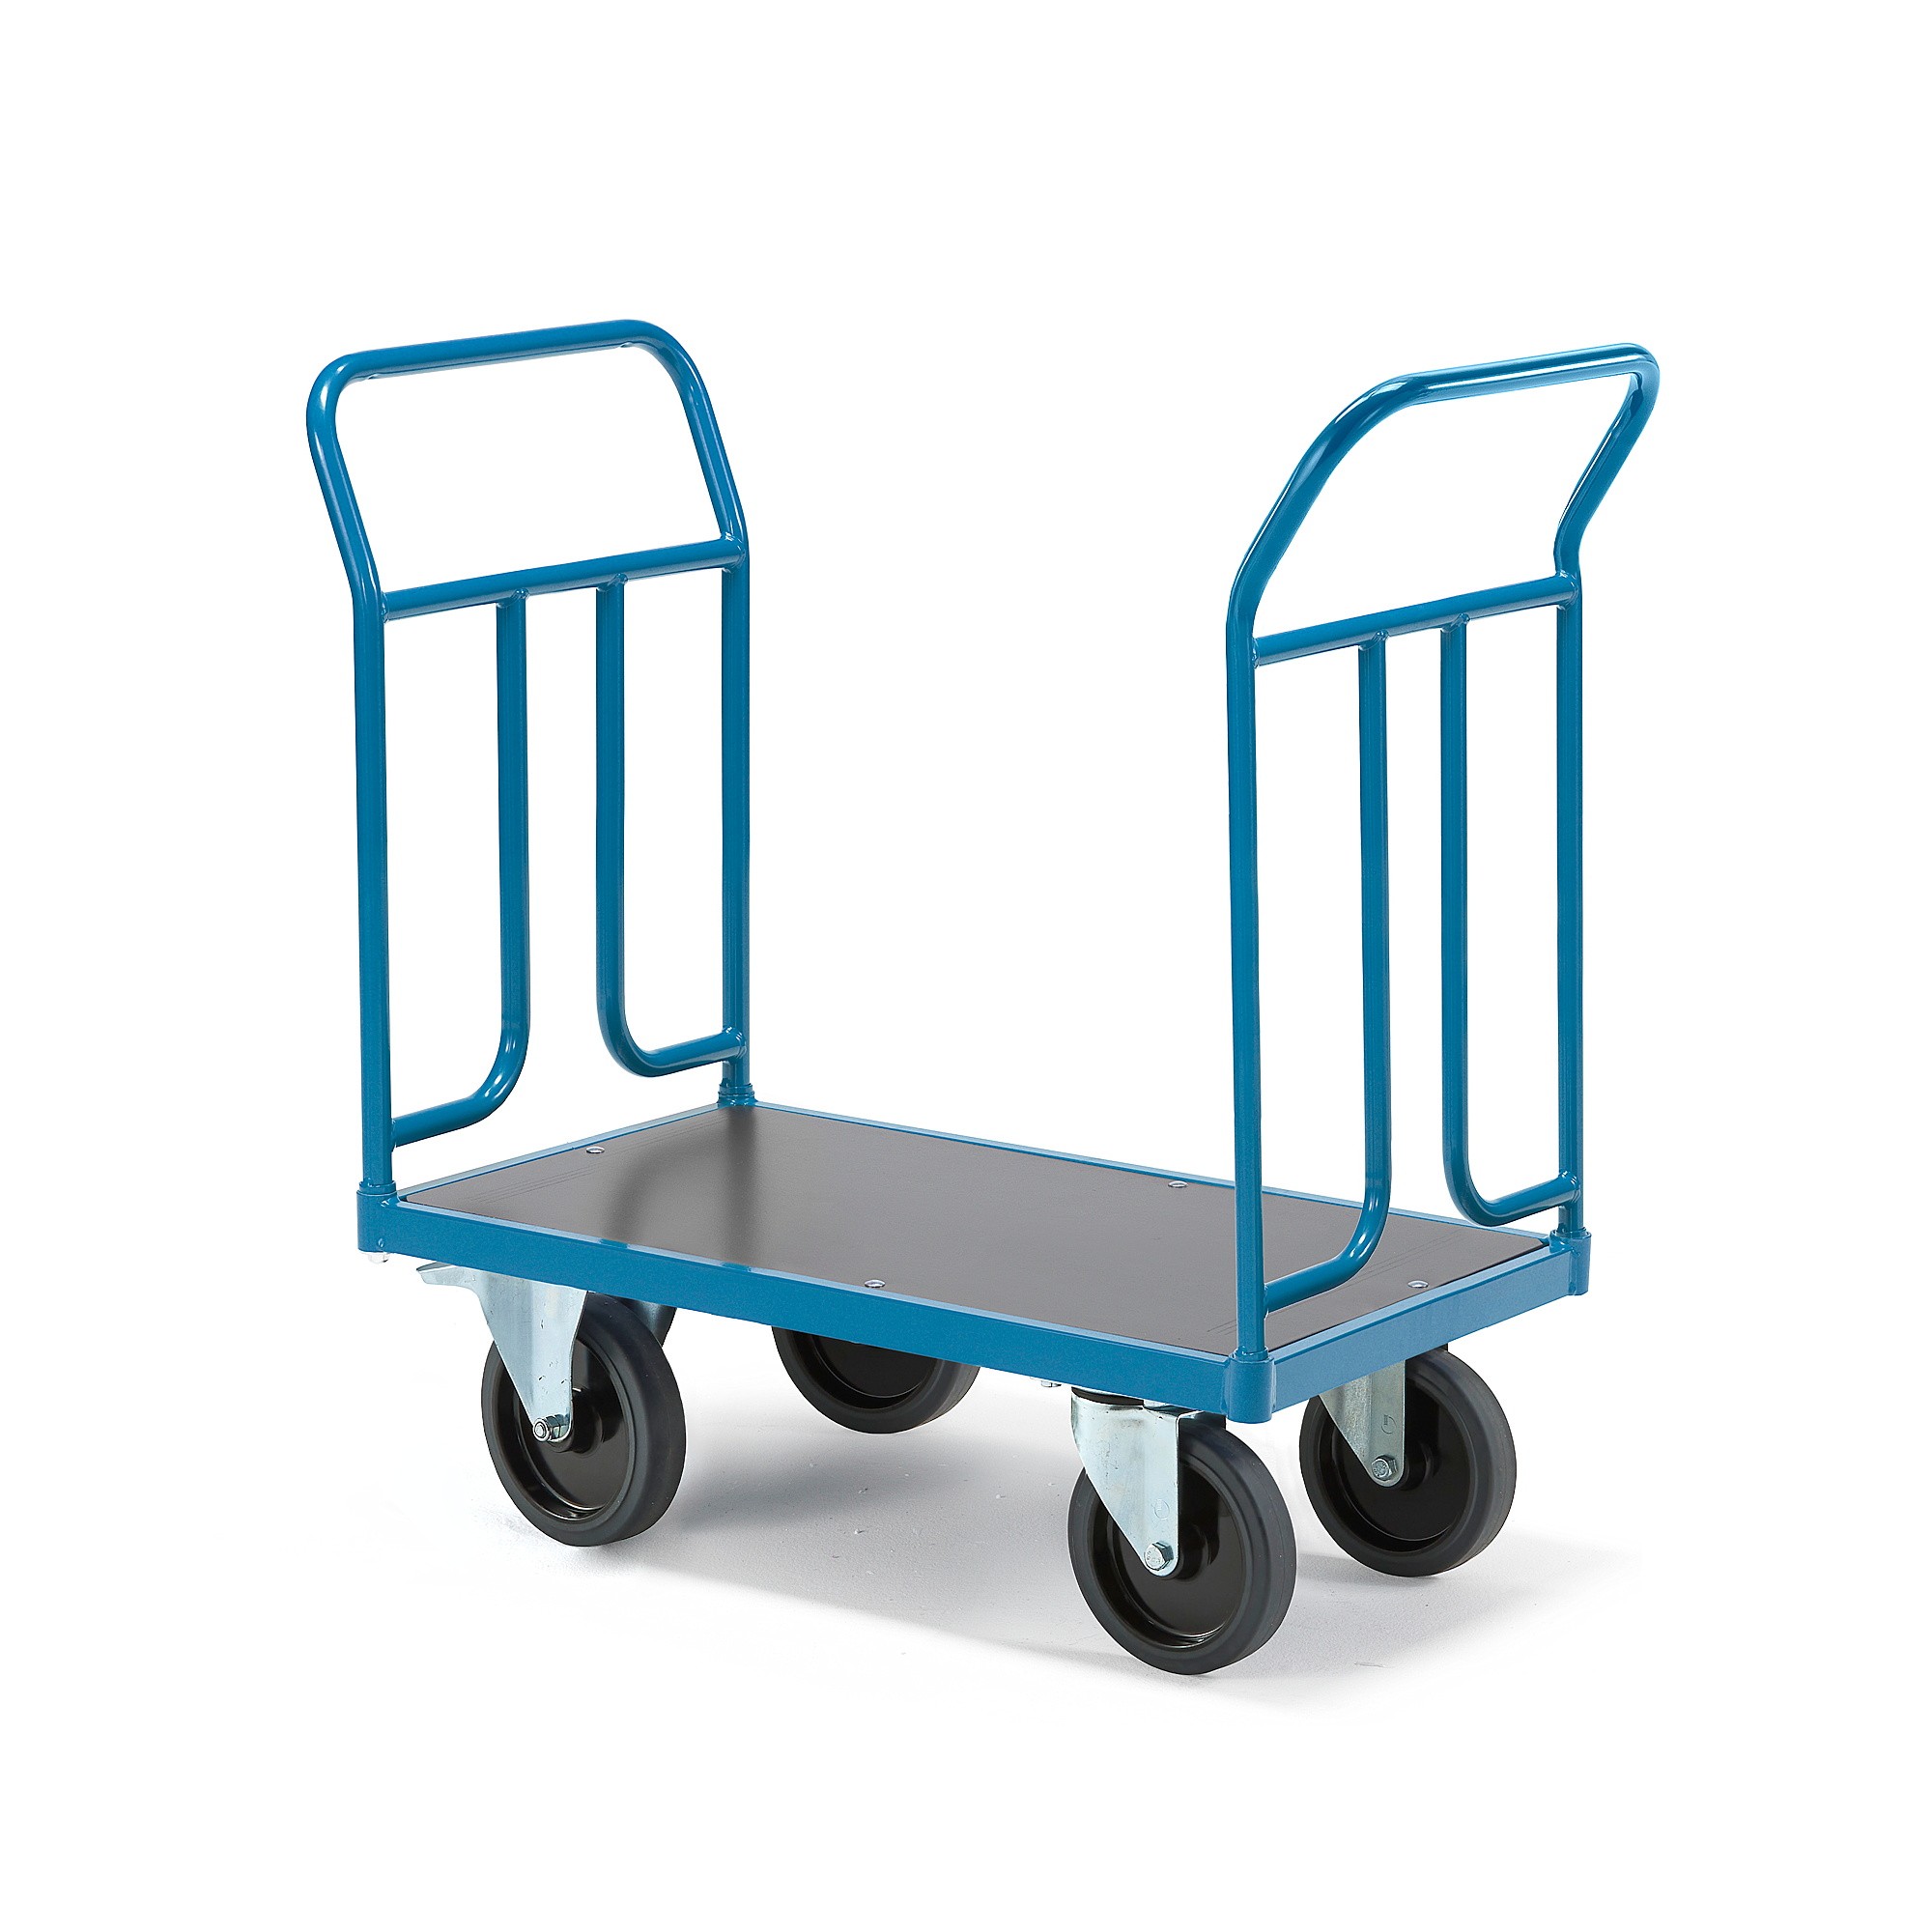 Plošinový vozík TRANSFER, 2 čelní trubkové rámy, 900x500 mm, 1000 kg, elastická gumová kola, s brzda